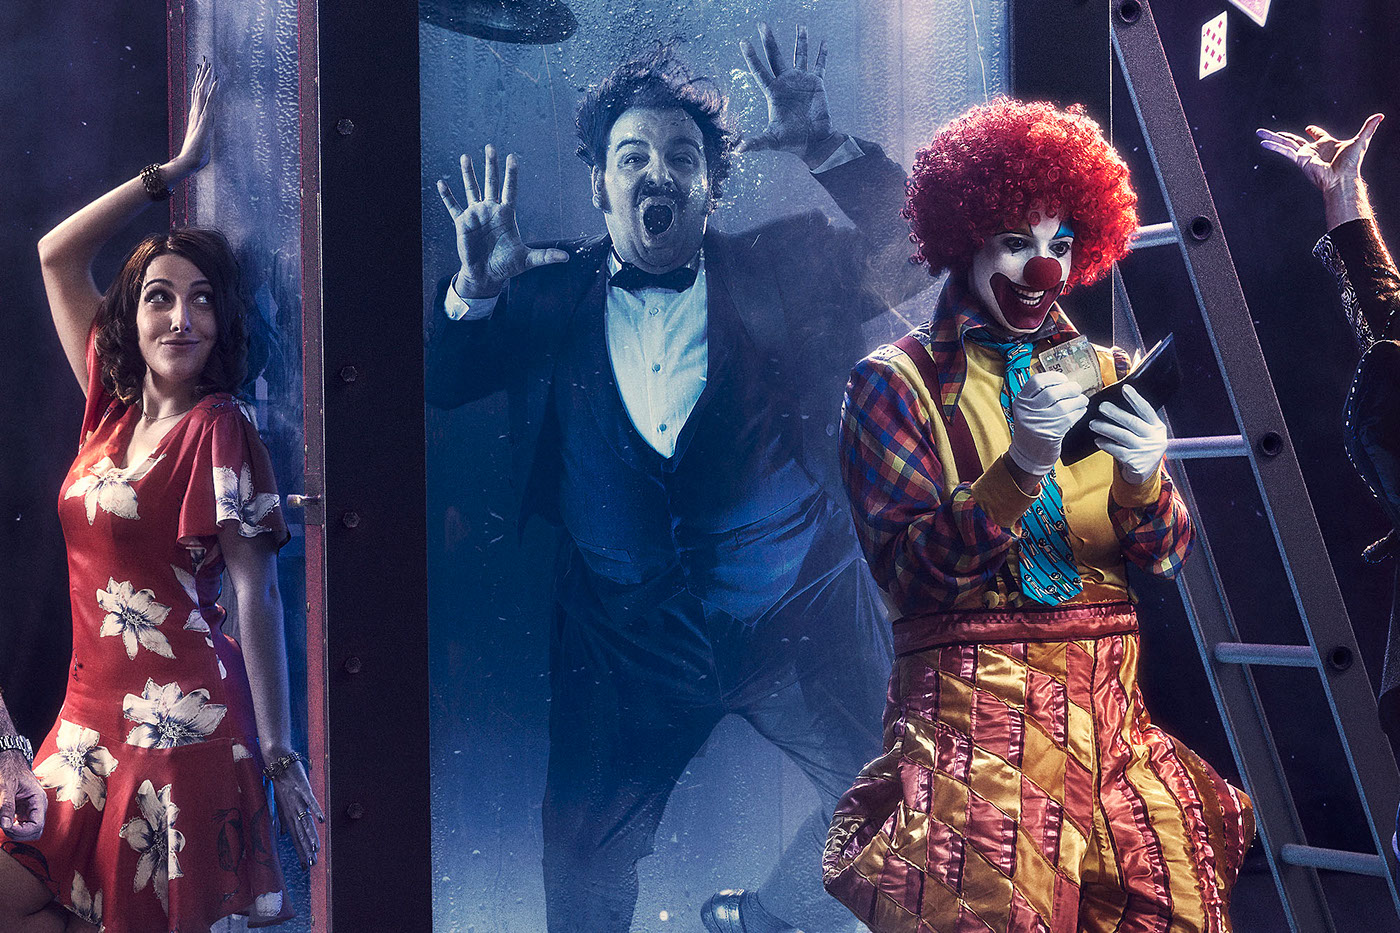 lightfarm studios lightfarm brasil lightfarm clows Magic   porta dos fundos FOX tv